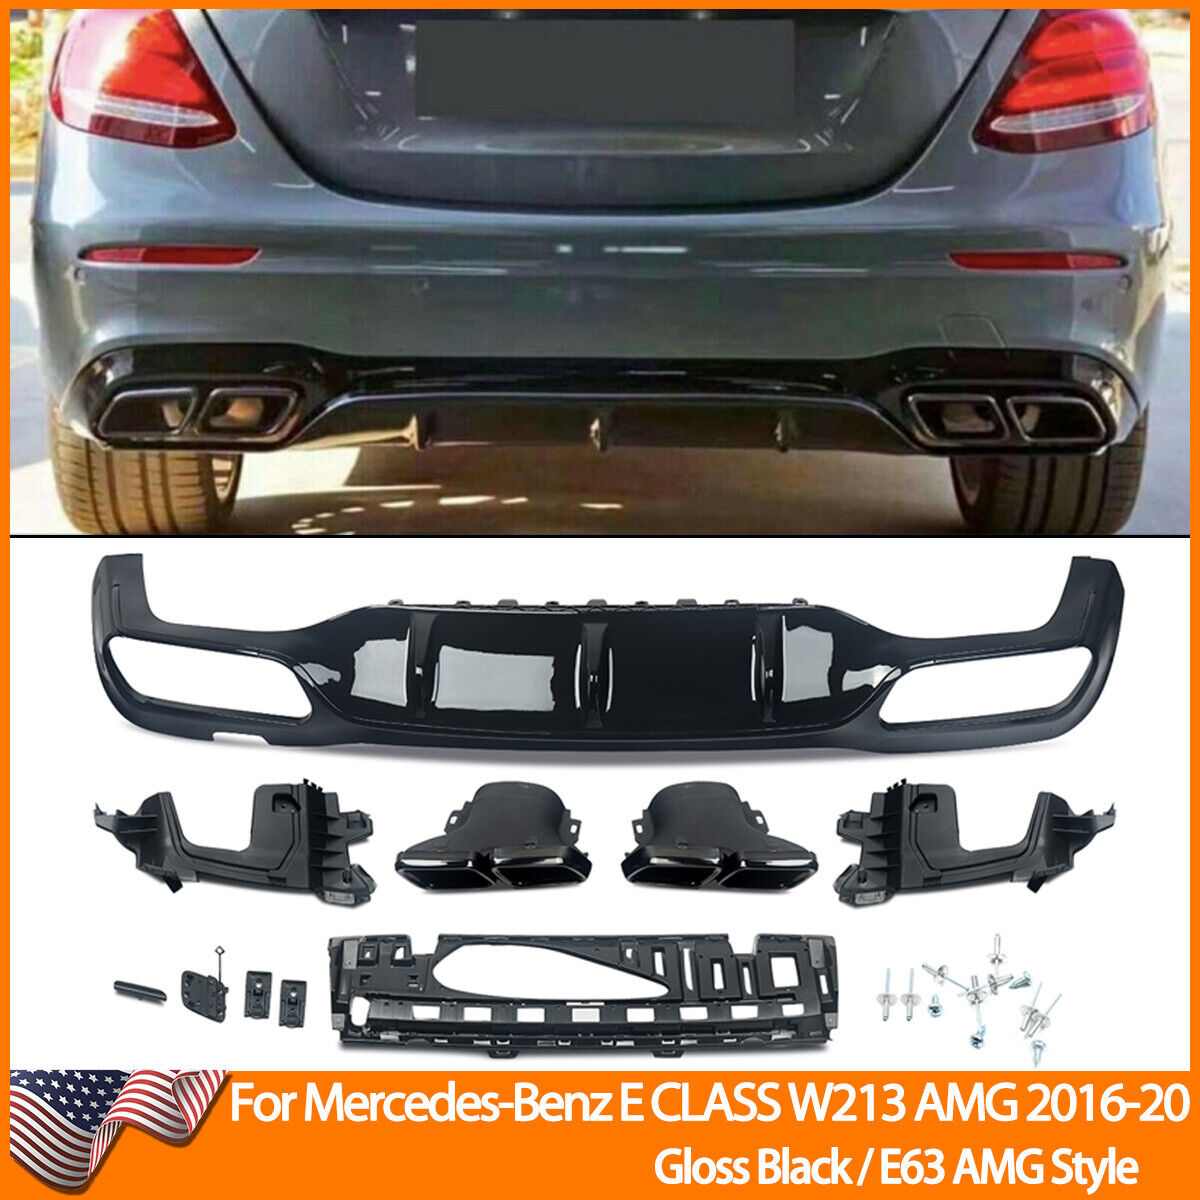 E63 Style Rear Diffuser Exhaust Tips For Mercedes Benz E Class W213 AMG 2016-20